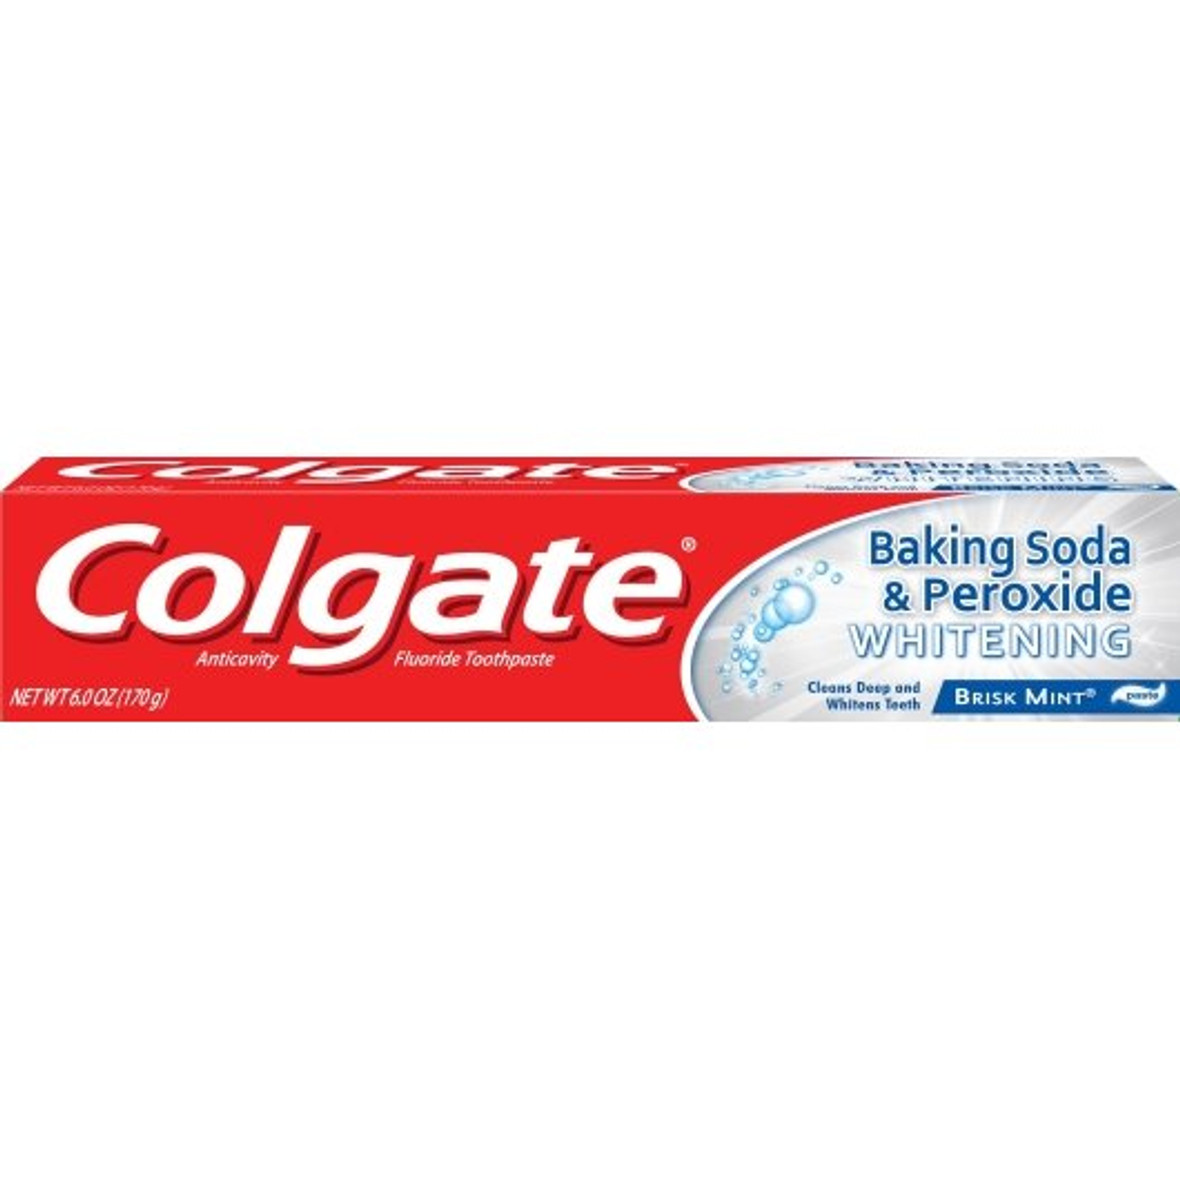 Colgate Baking Soda & Peroxide Whitening Brisk Mint Toothpaste, 6 Ounces, 6 Per Box, 4 Per Case